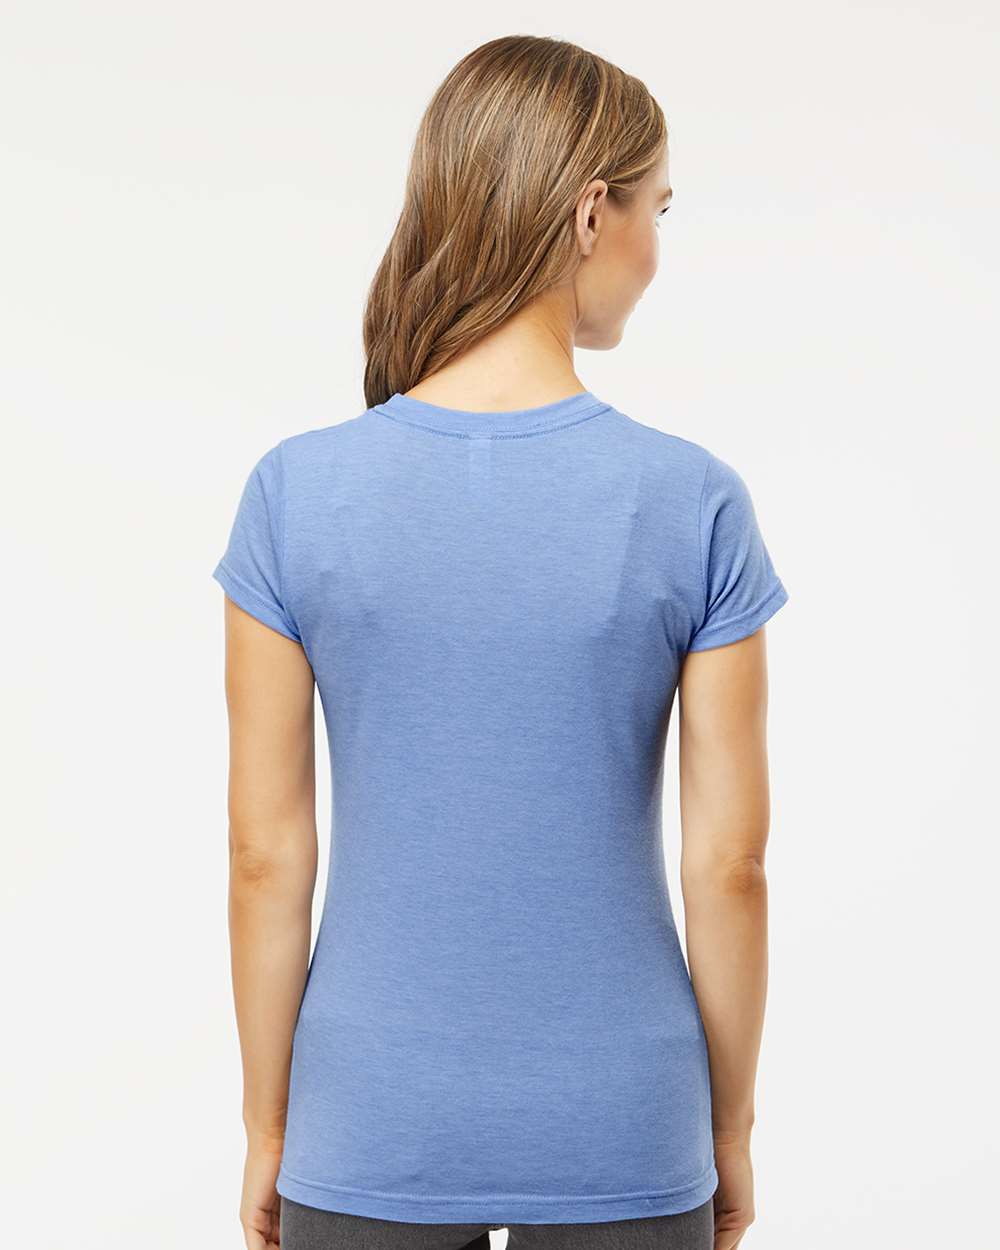 M&O Women’s Deluxe Blend T-Shirt #3540 Heather Blue Back